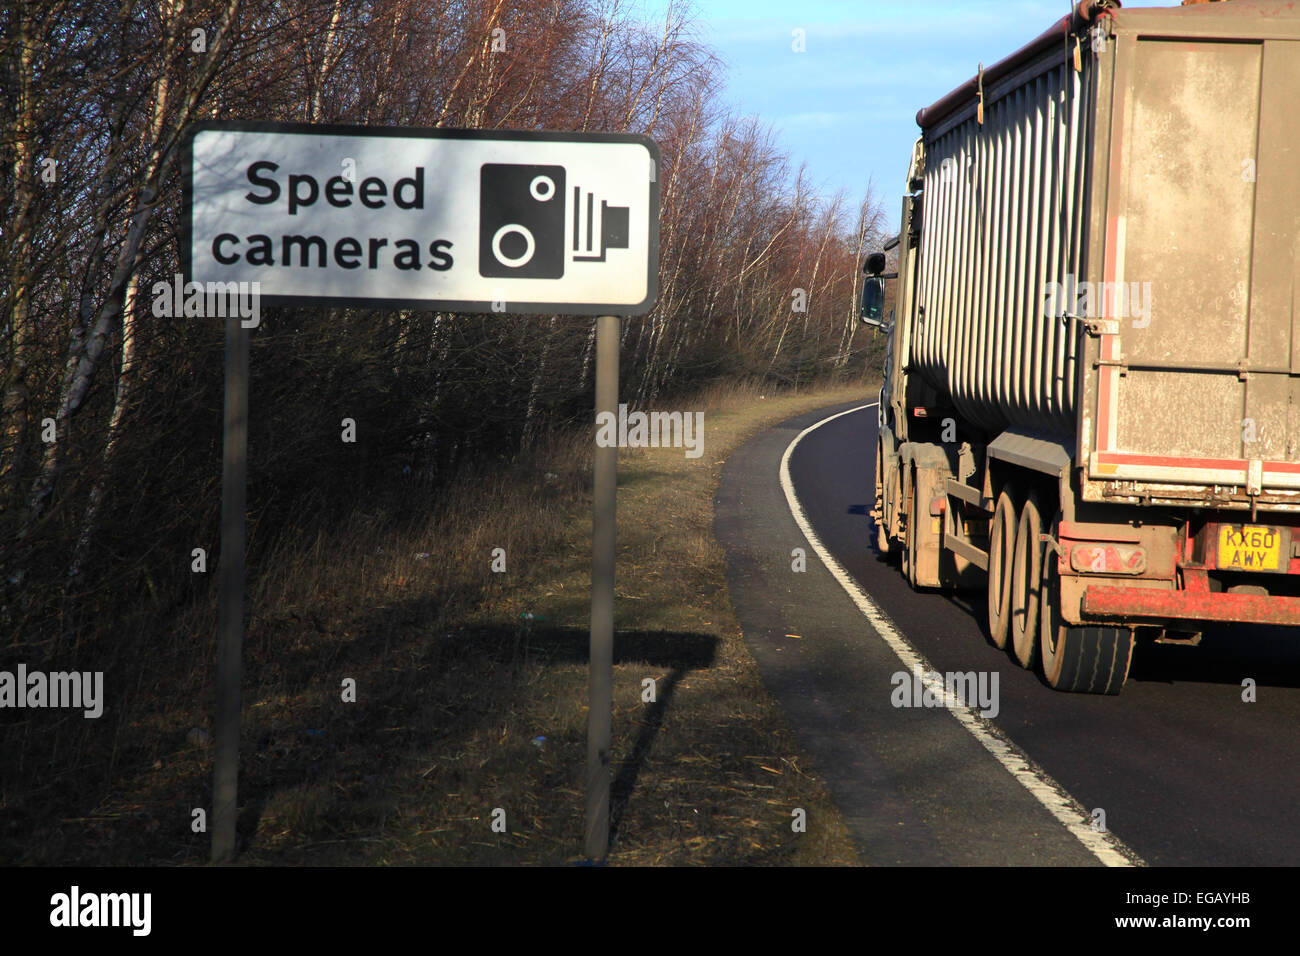 Speed Camera, Warning sign, action, Gatso, bus lane cameras, red light cameras, Yellow box junction, average speed, Truvelo, Gatso, Smart Motorways. Stock Photo